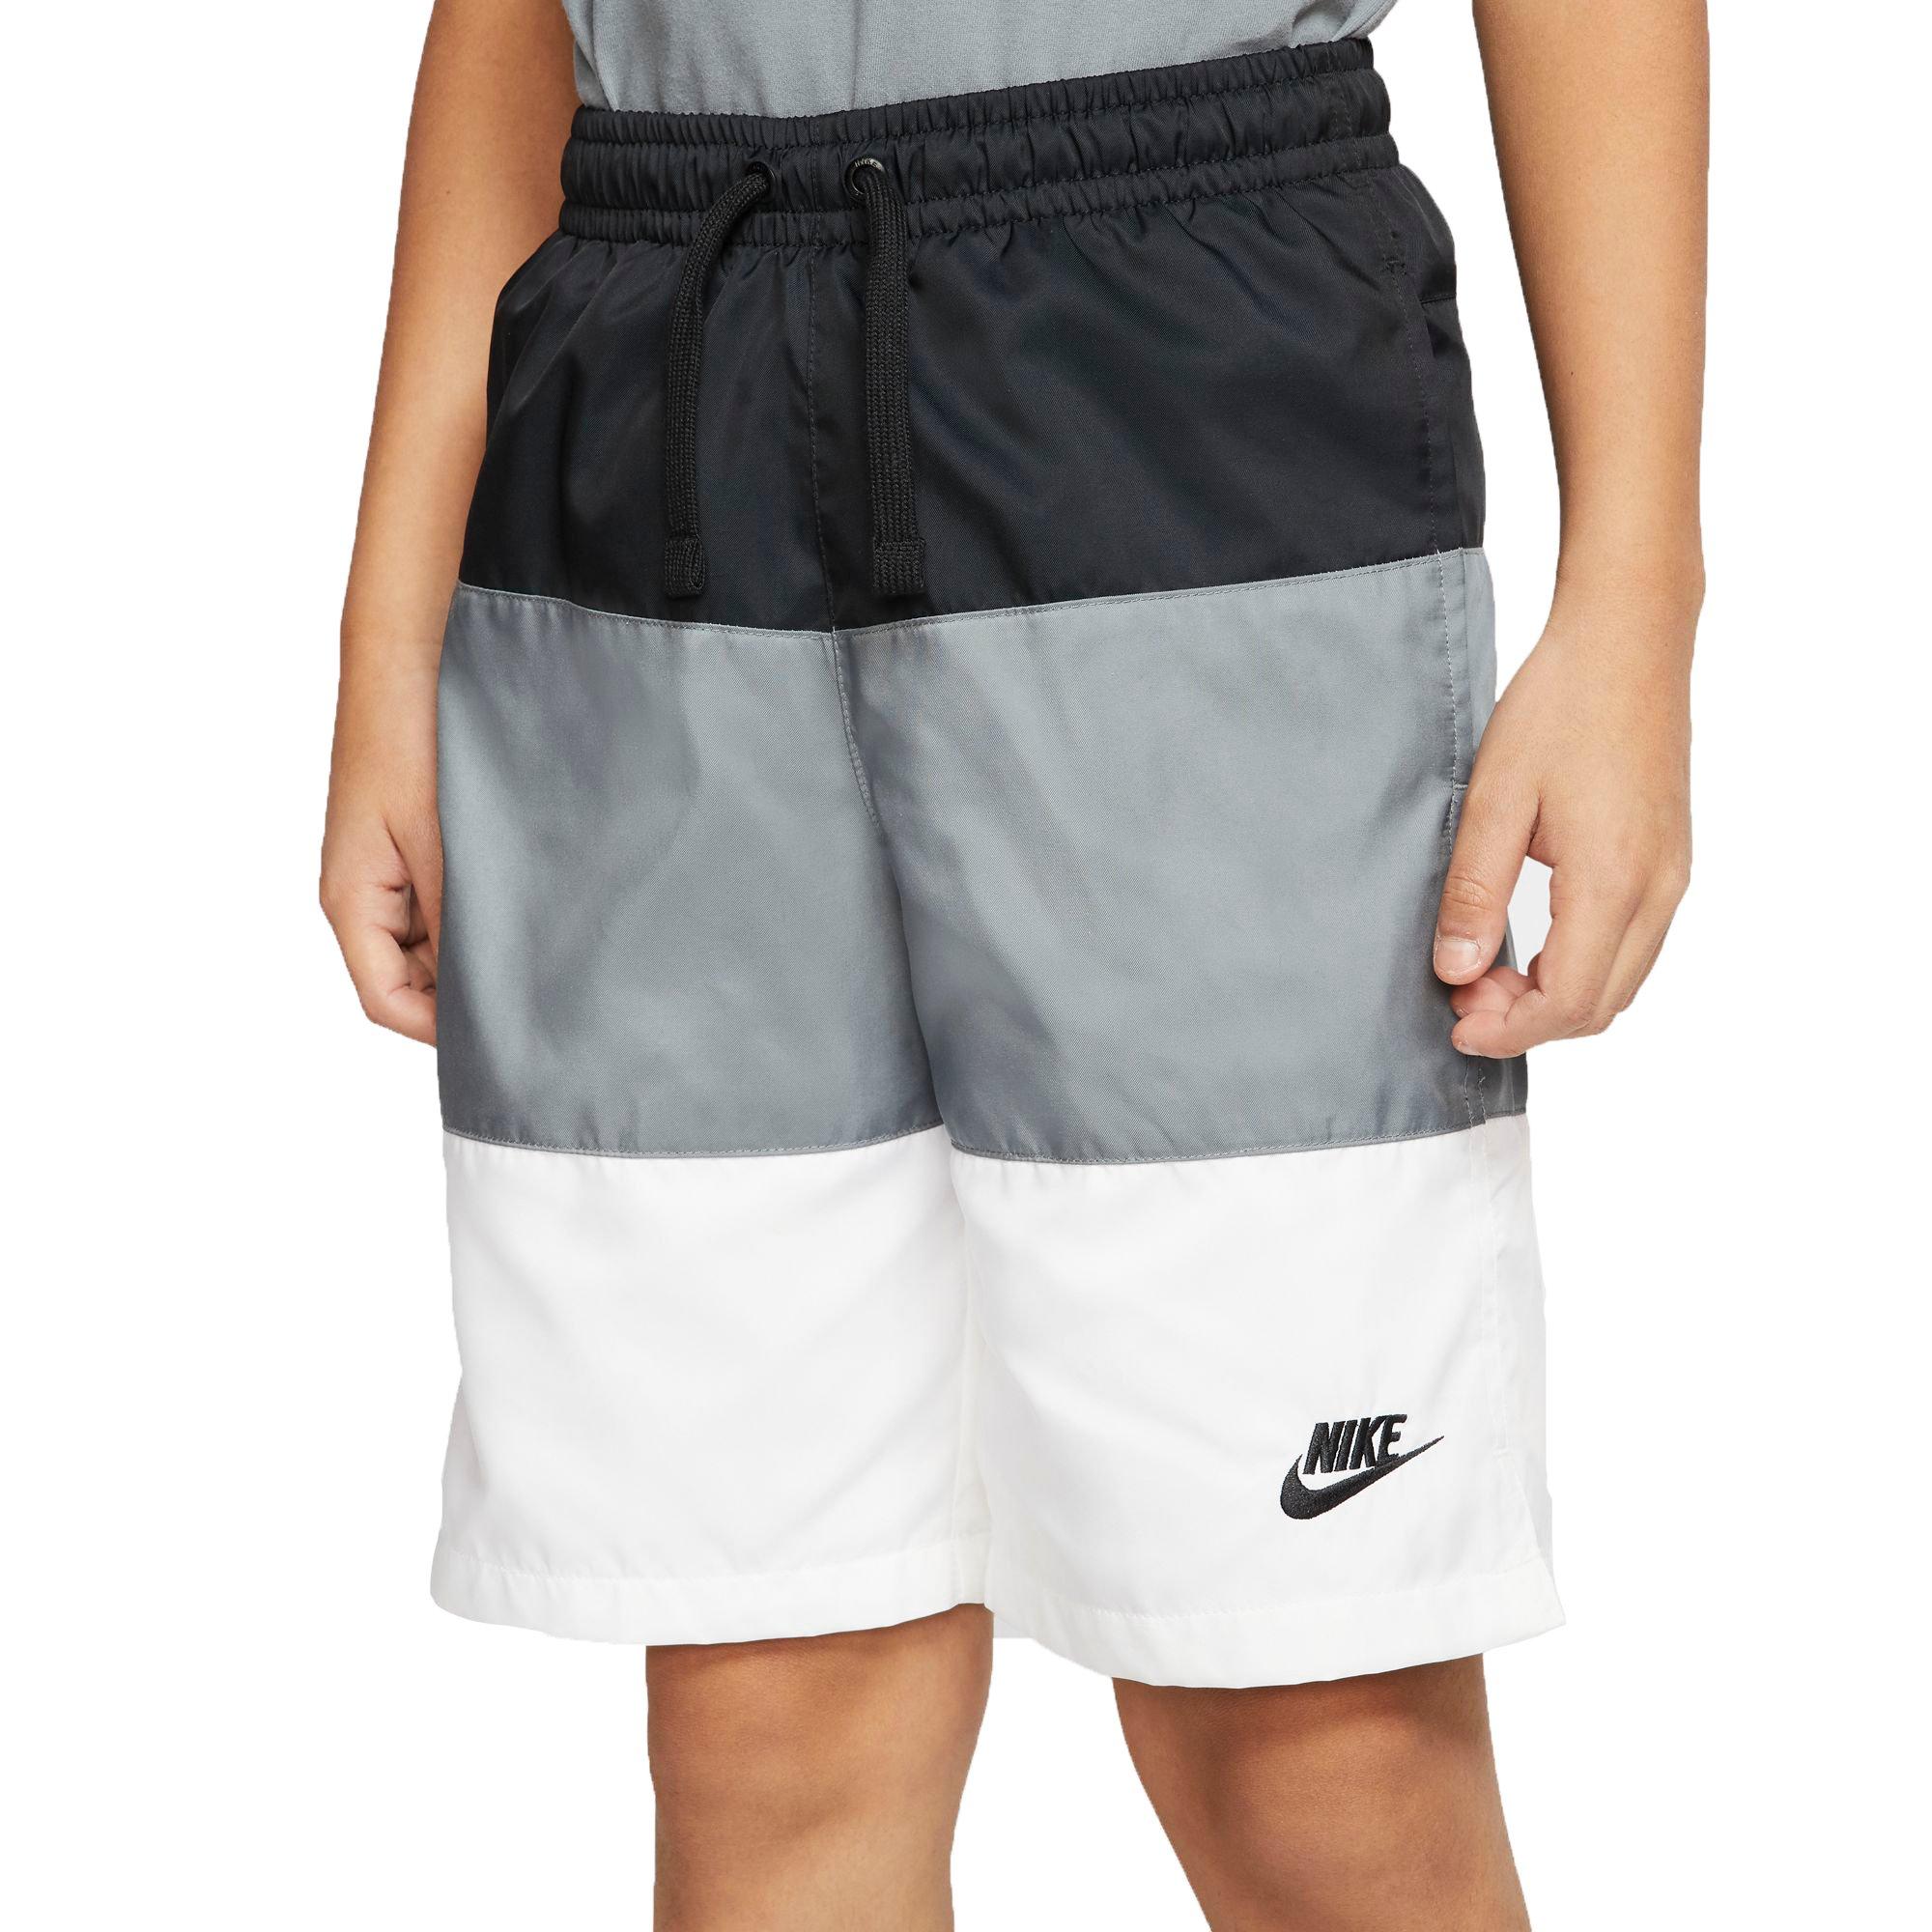 hibbett sports mens shorts